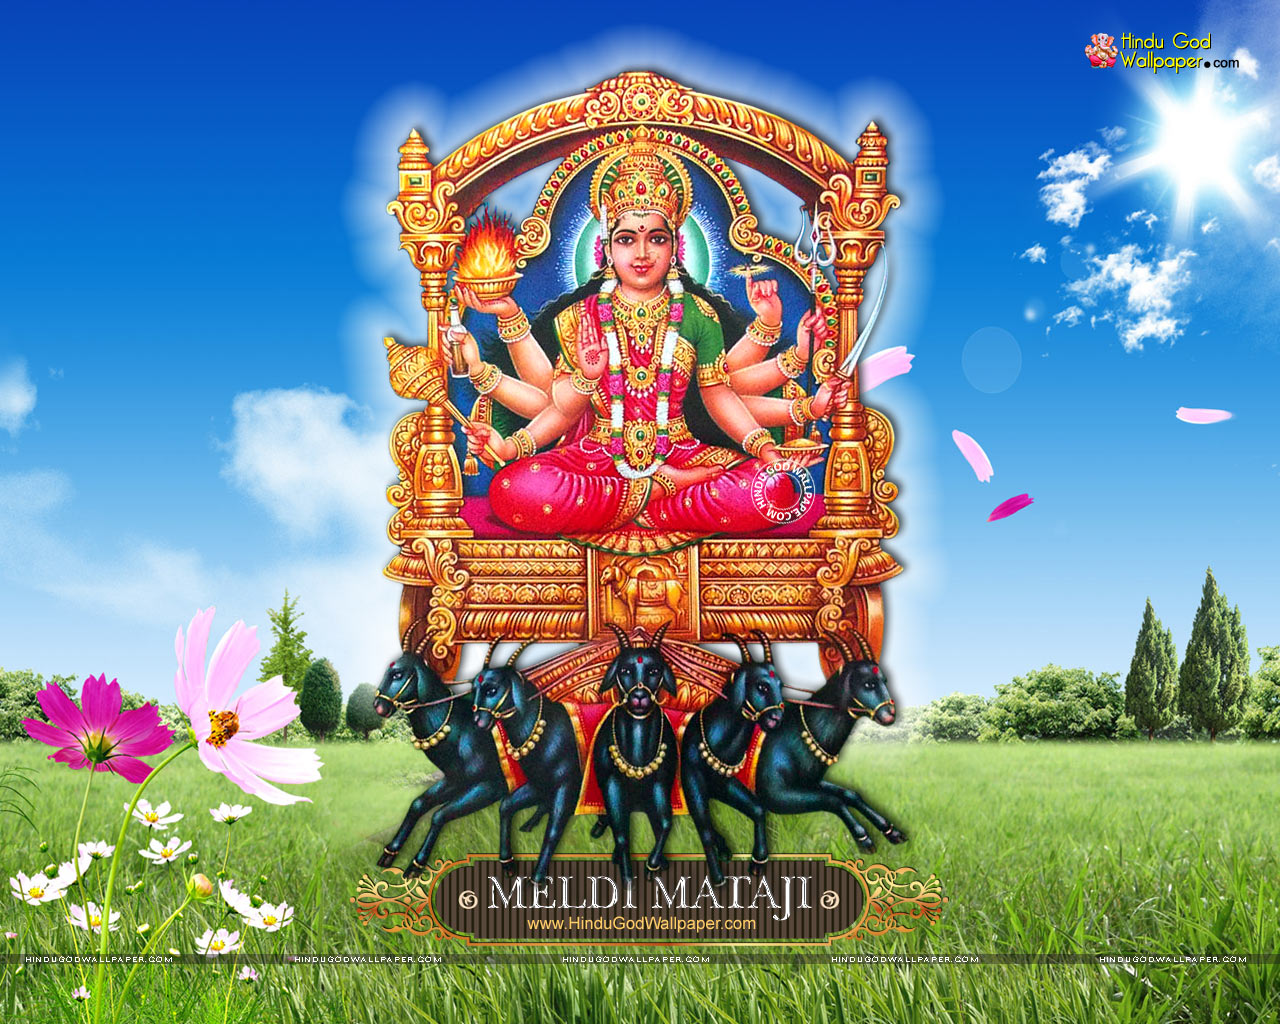 Meldi Maa Live Wallpaper & Photo Free Download